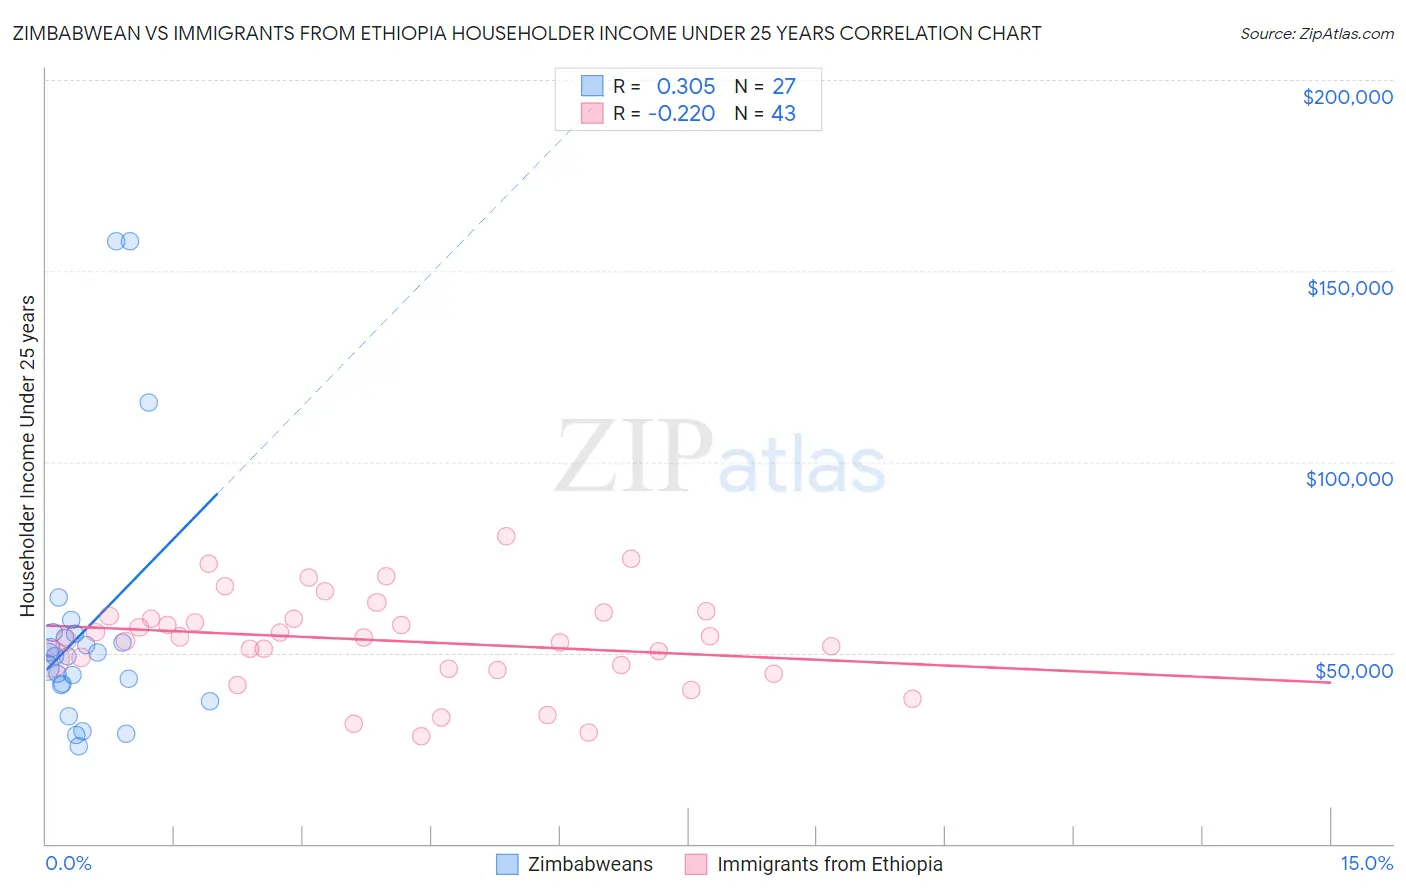 Zimbabwean vs Immigrants from Ethiopia Householder Income Under 25 years